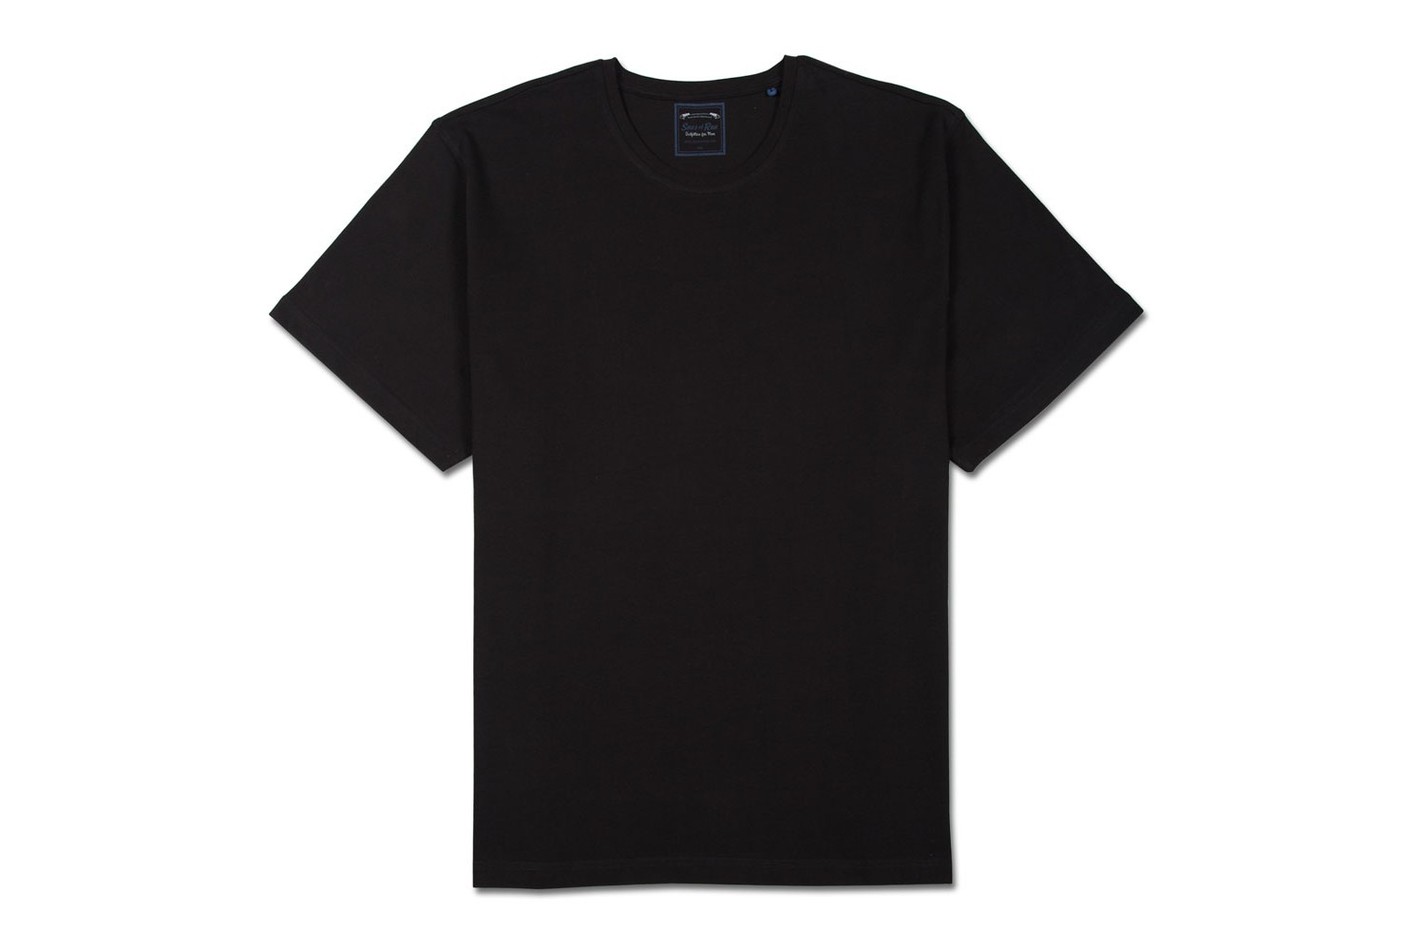 Plain Black T Shirt Clipart - Free to use Clip Art Resource